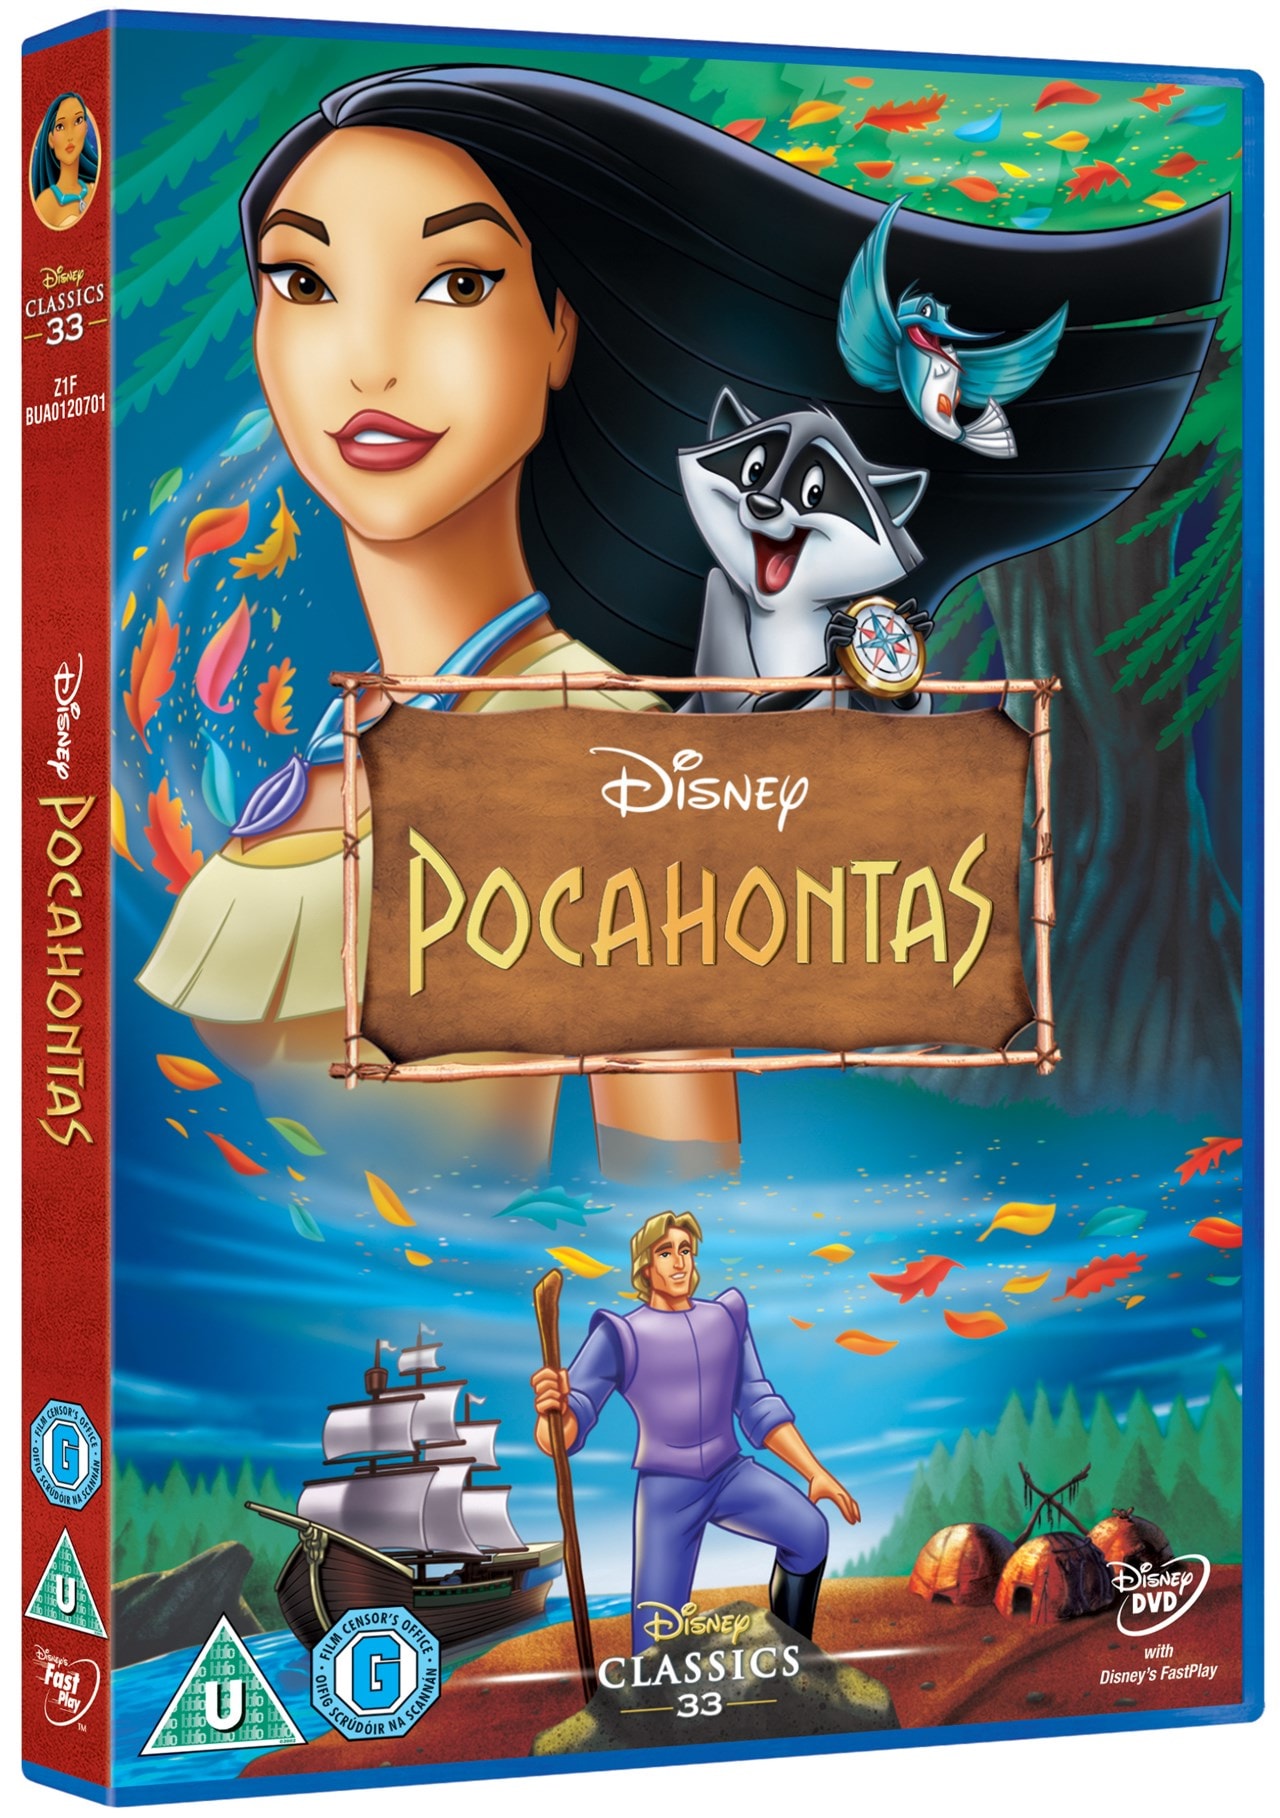 Pocahontas (Disney) DVD Free shipping over £20 HMV Store